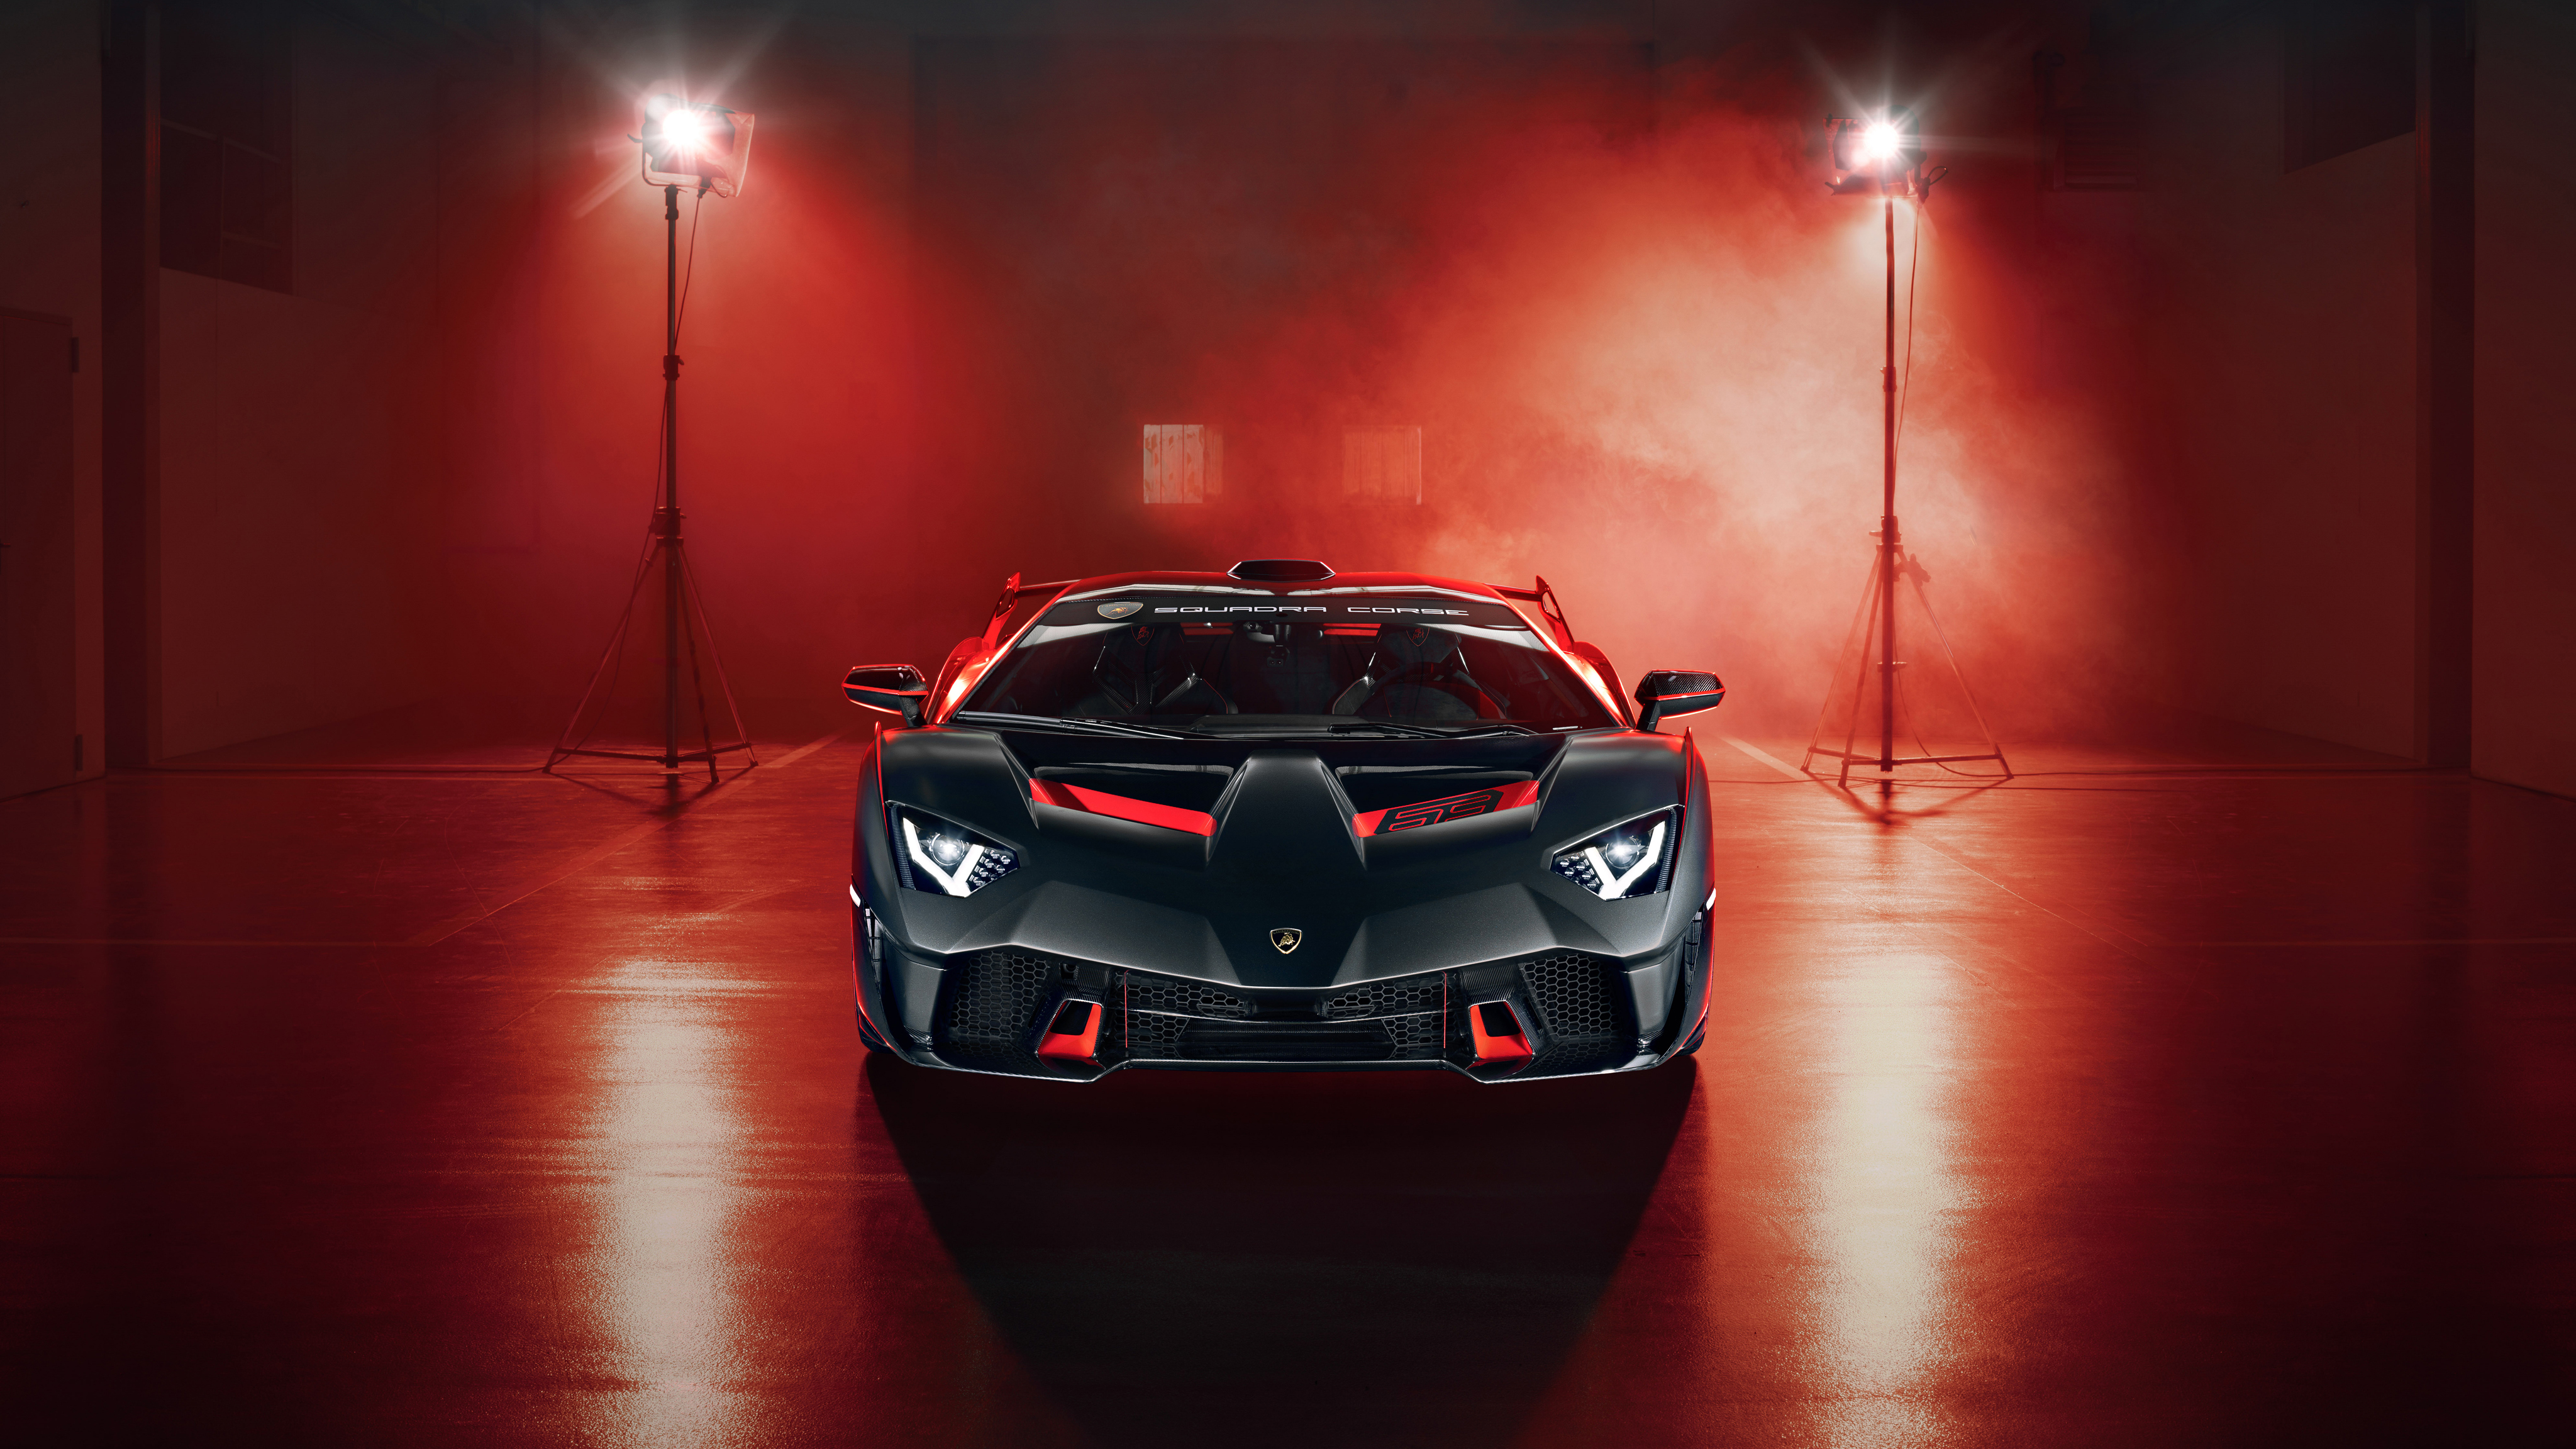 Lamborghini SC18 2019 4K Wallpapers